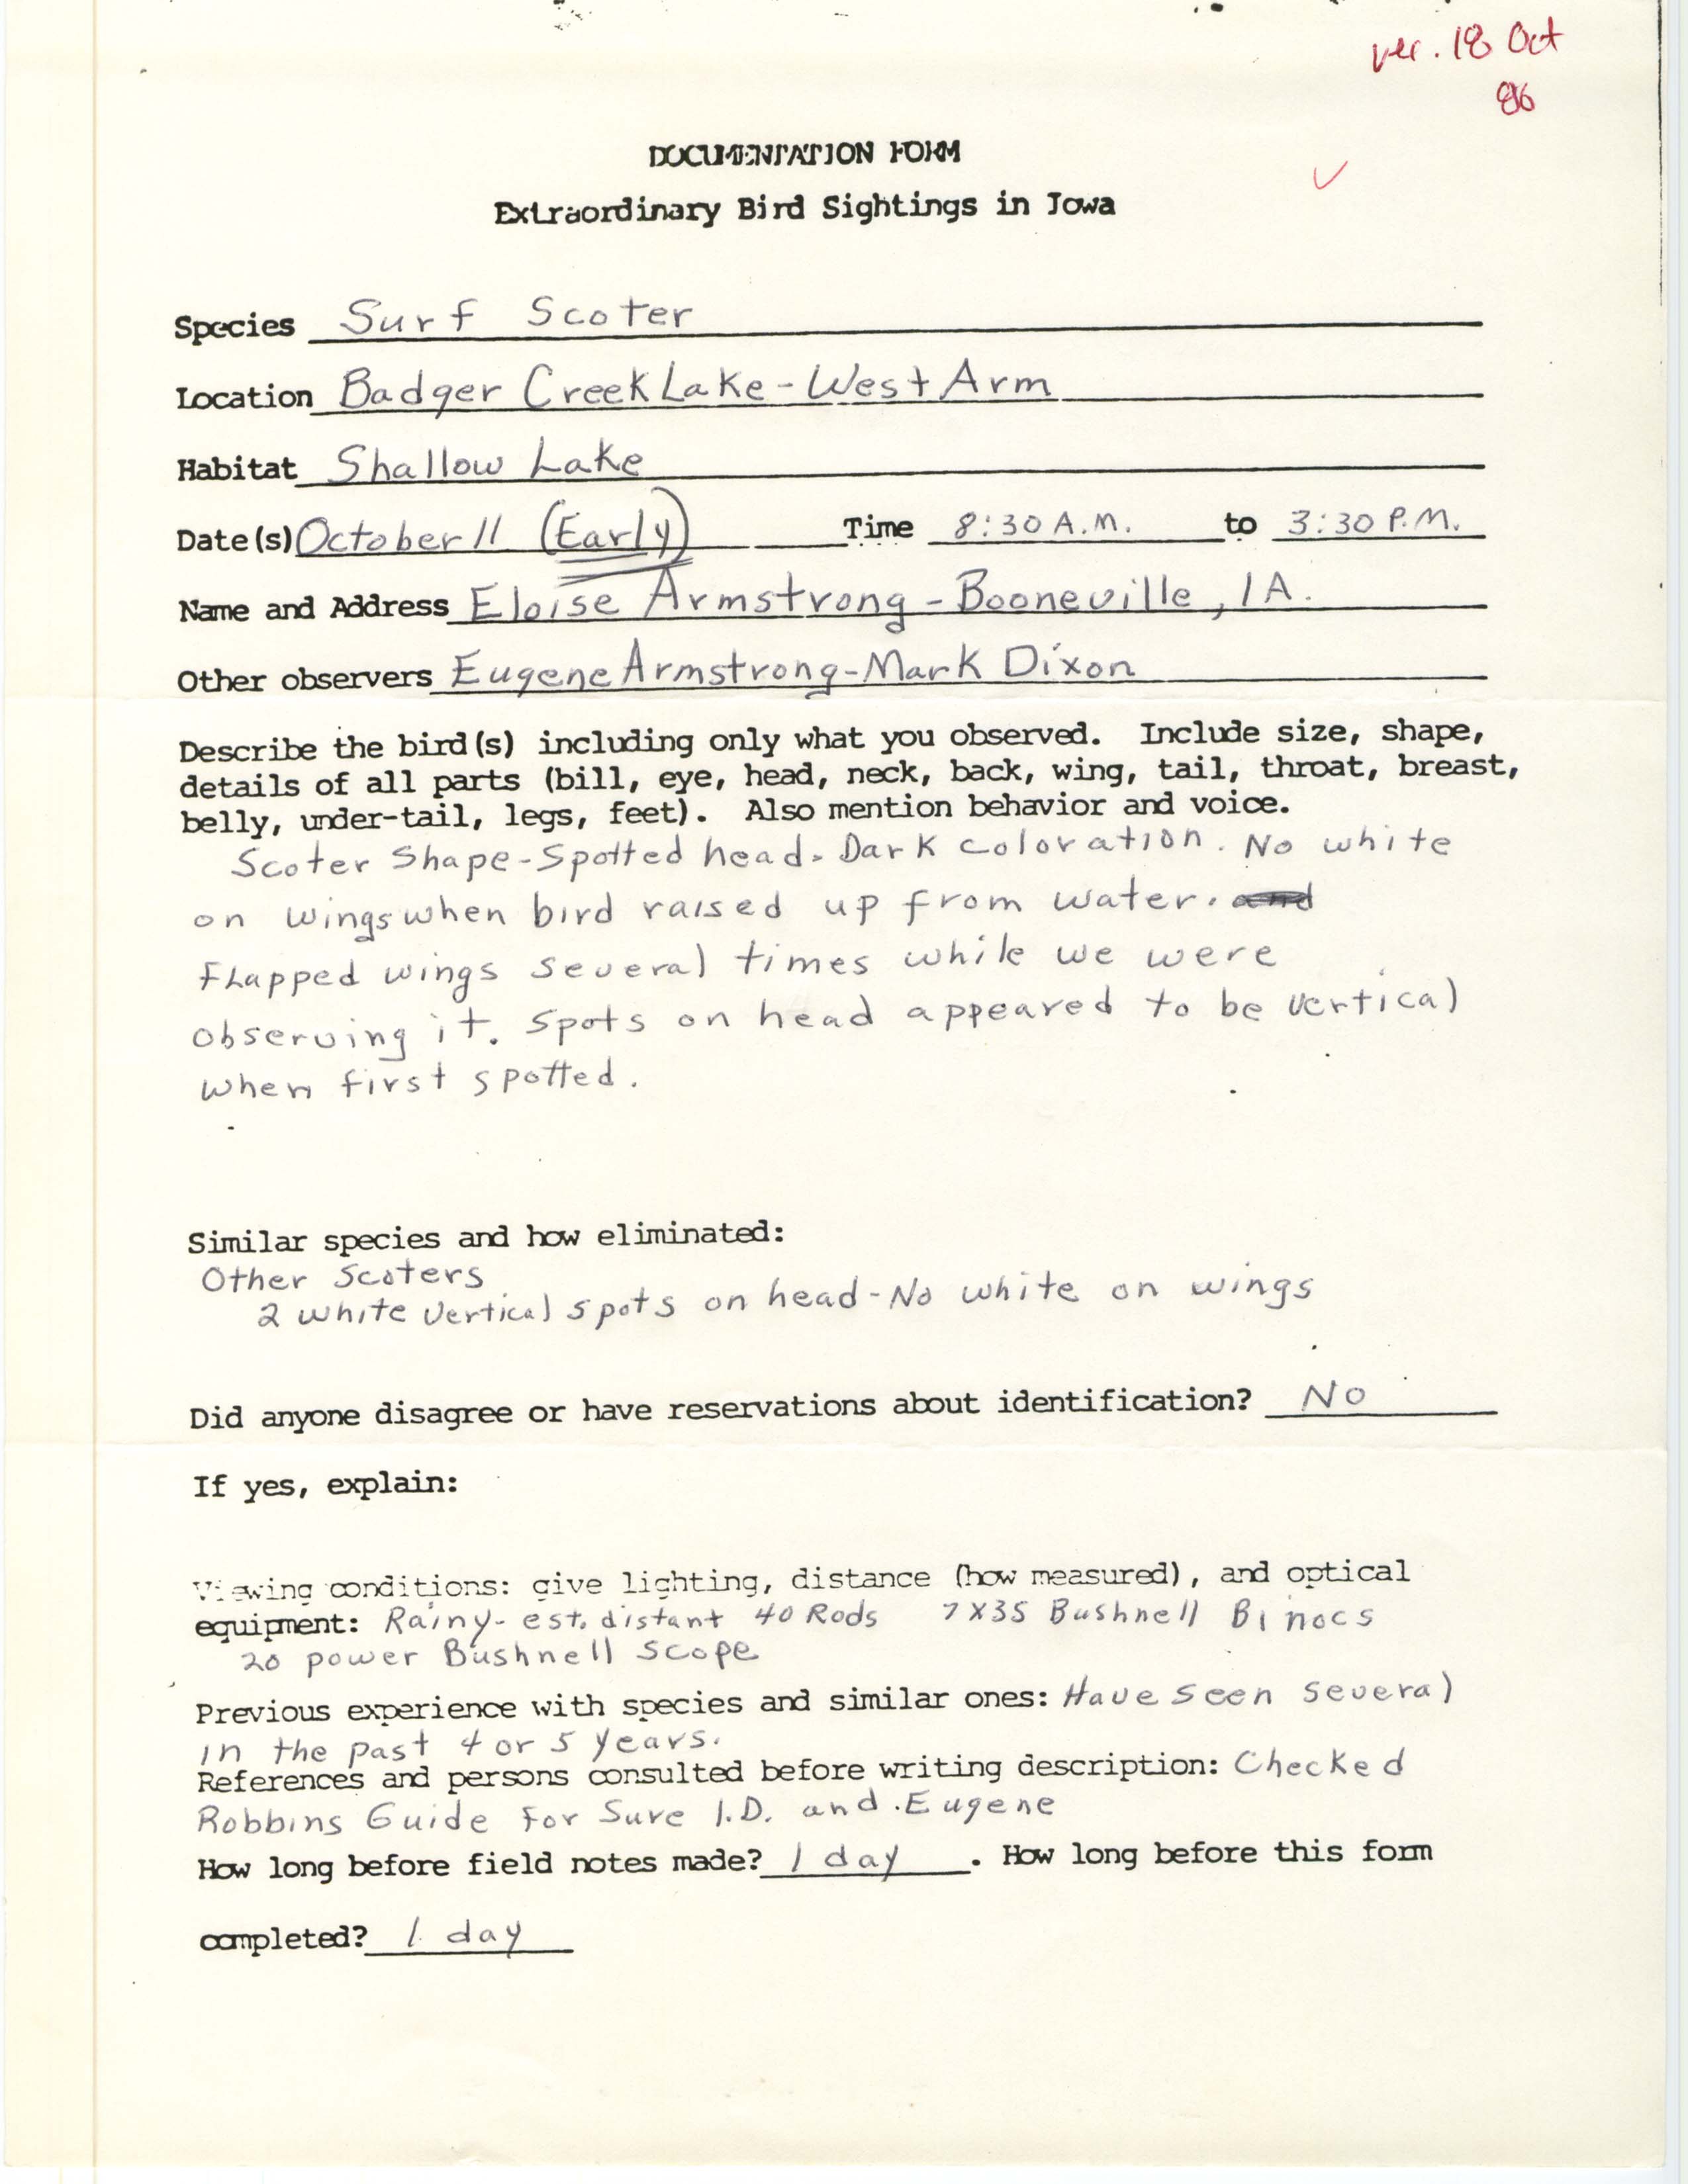 Rare bird documentation form for Surf Scoter at Badger Creek Lake, 1986